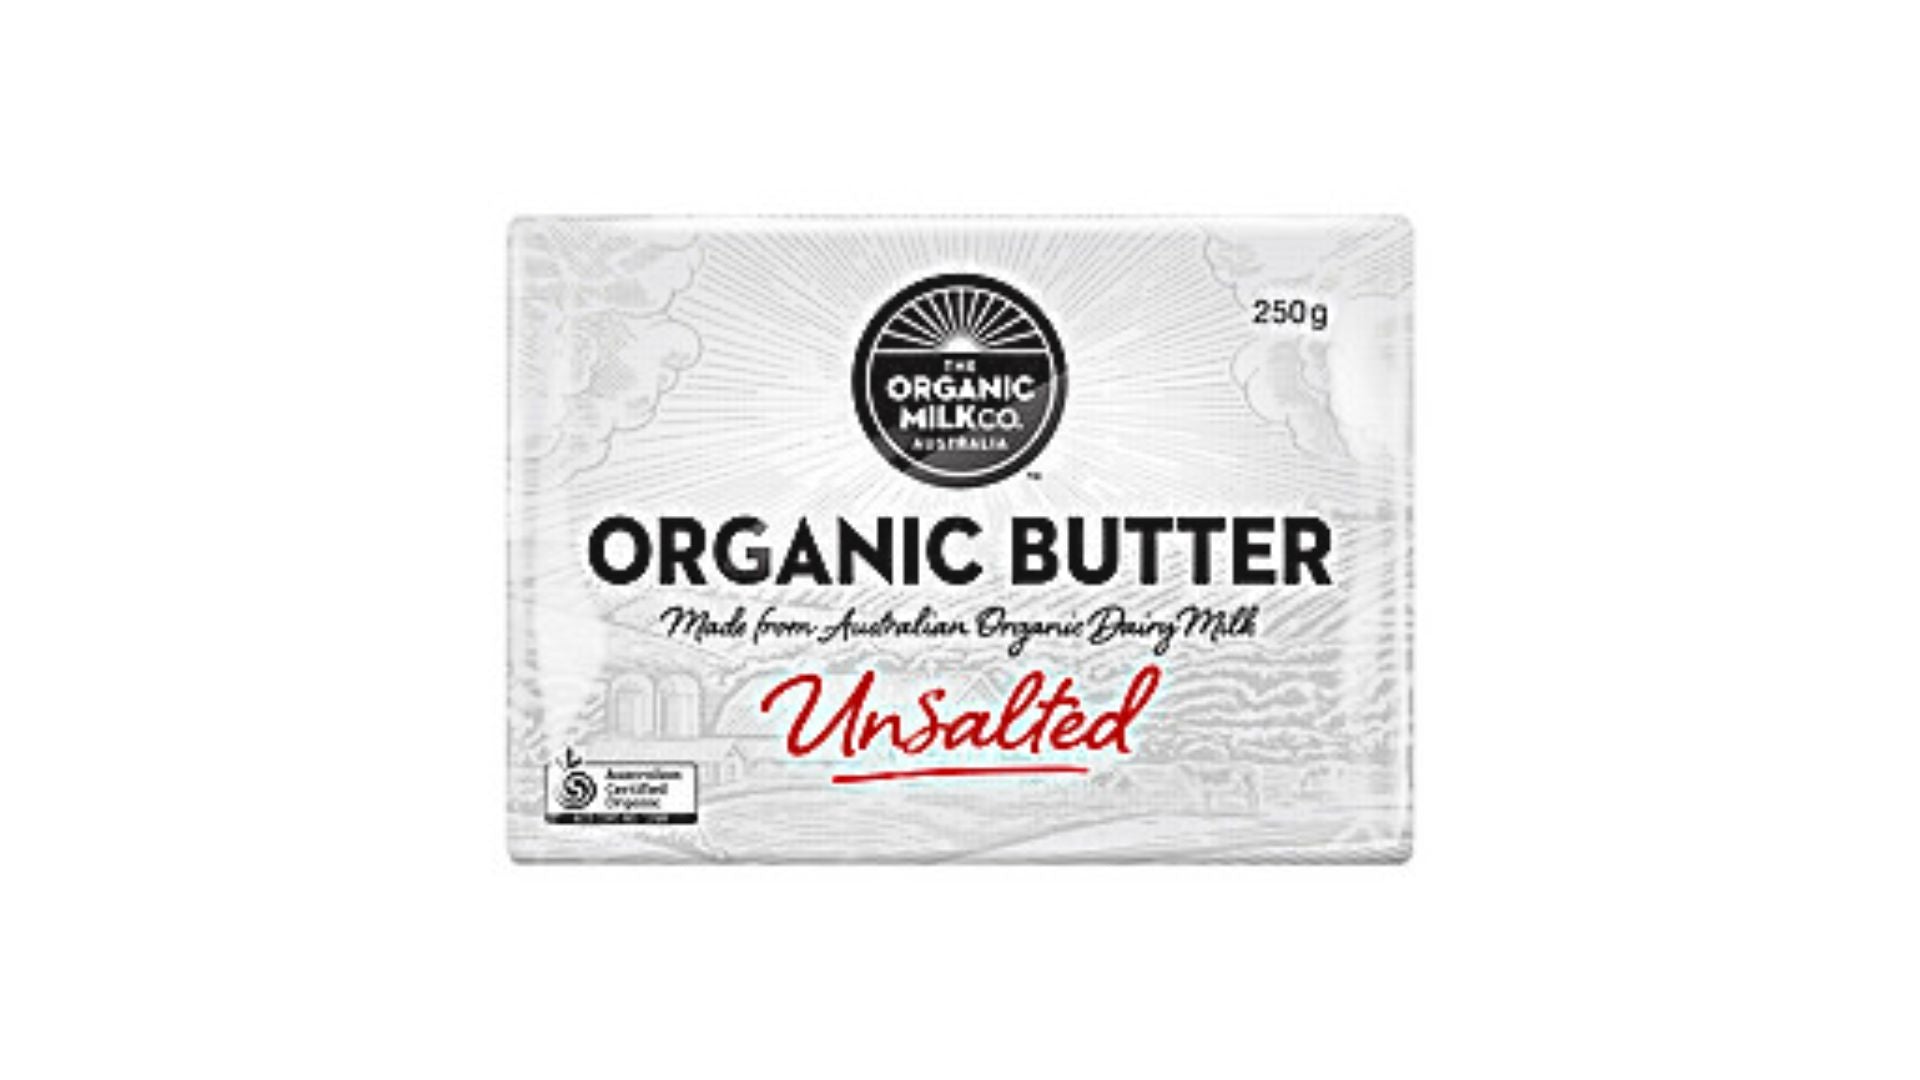 The Organic Milk Co Unsalted Butter 250g